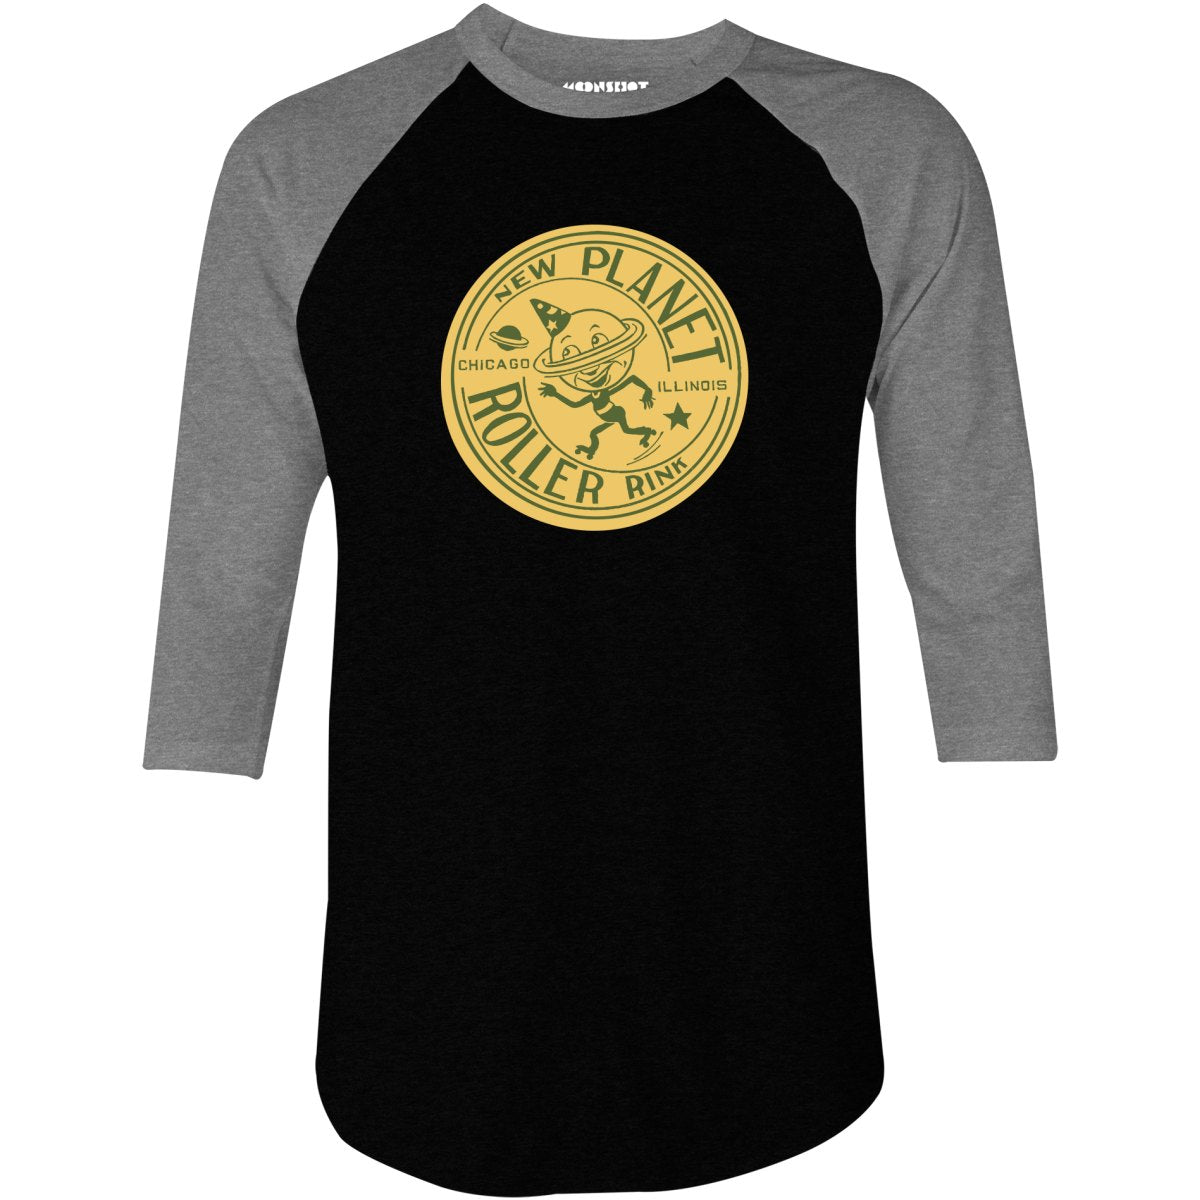 New Planet - Chicago, IL - Vintage Roller Rink - 3/4 Sleeve Raglan T-Shirt